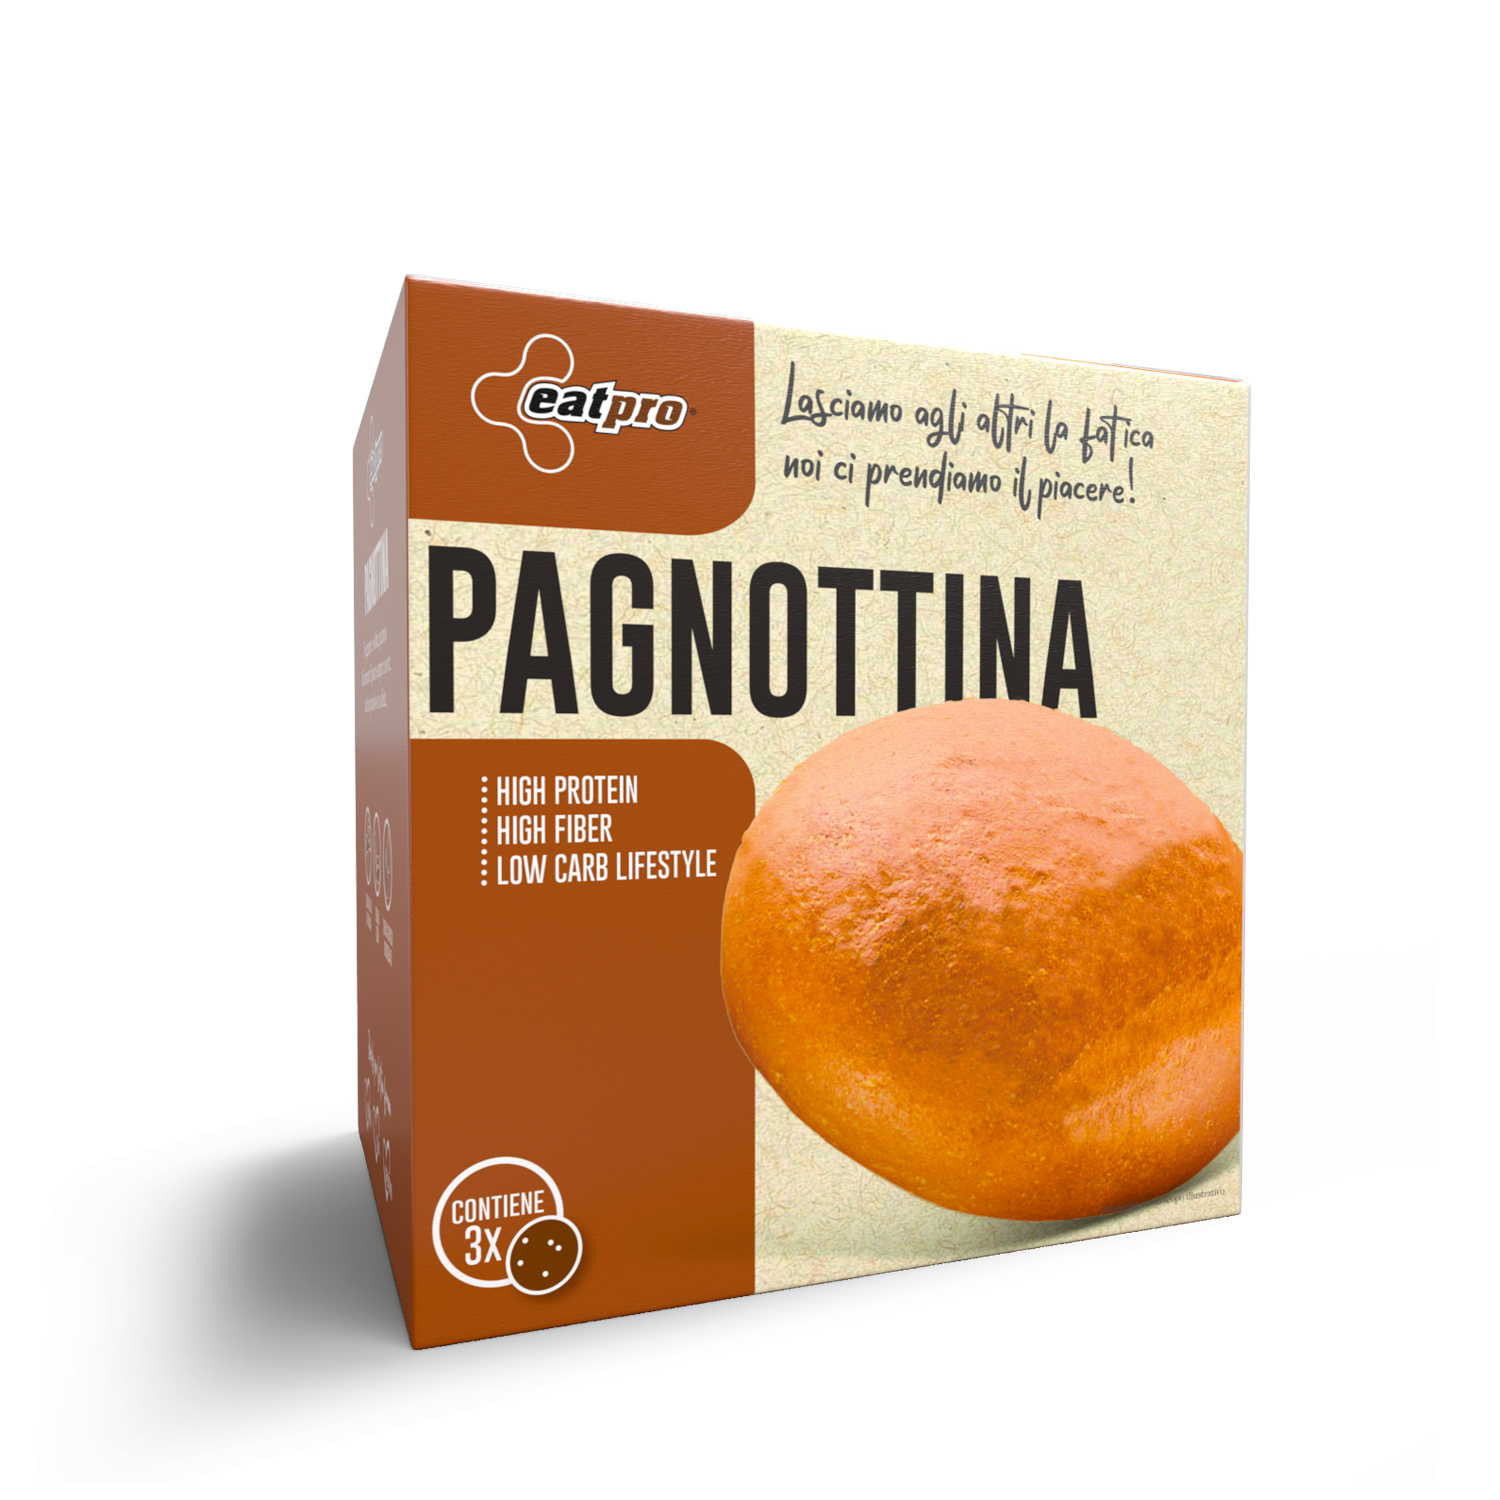 EatPro - Pagnottina alle noci 150g